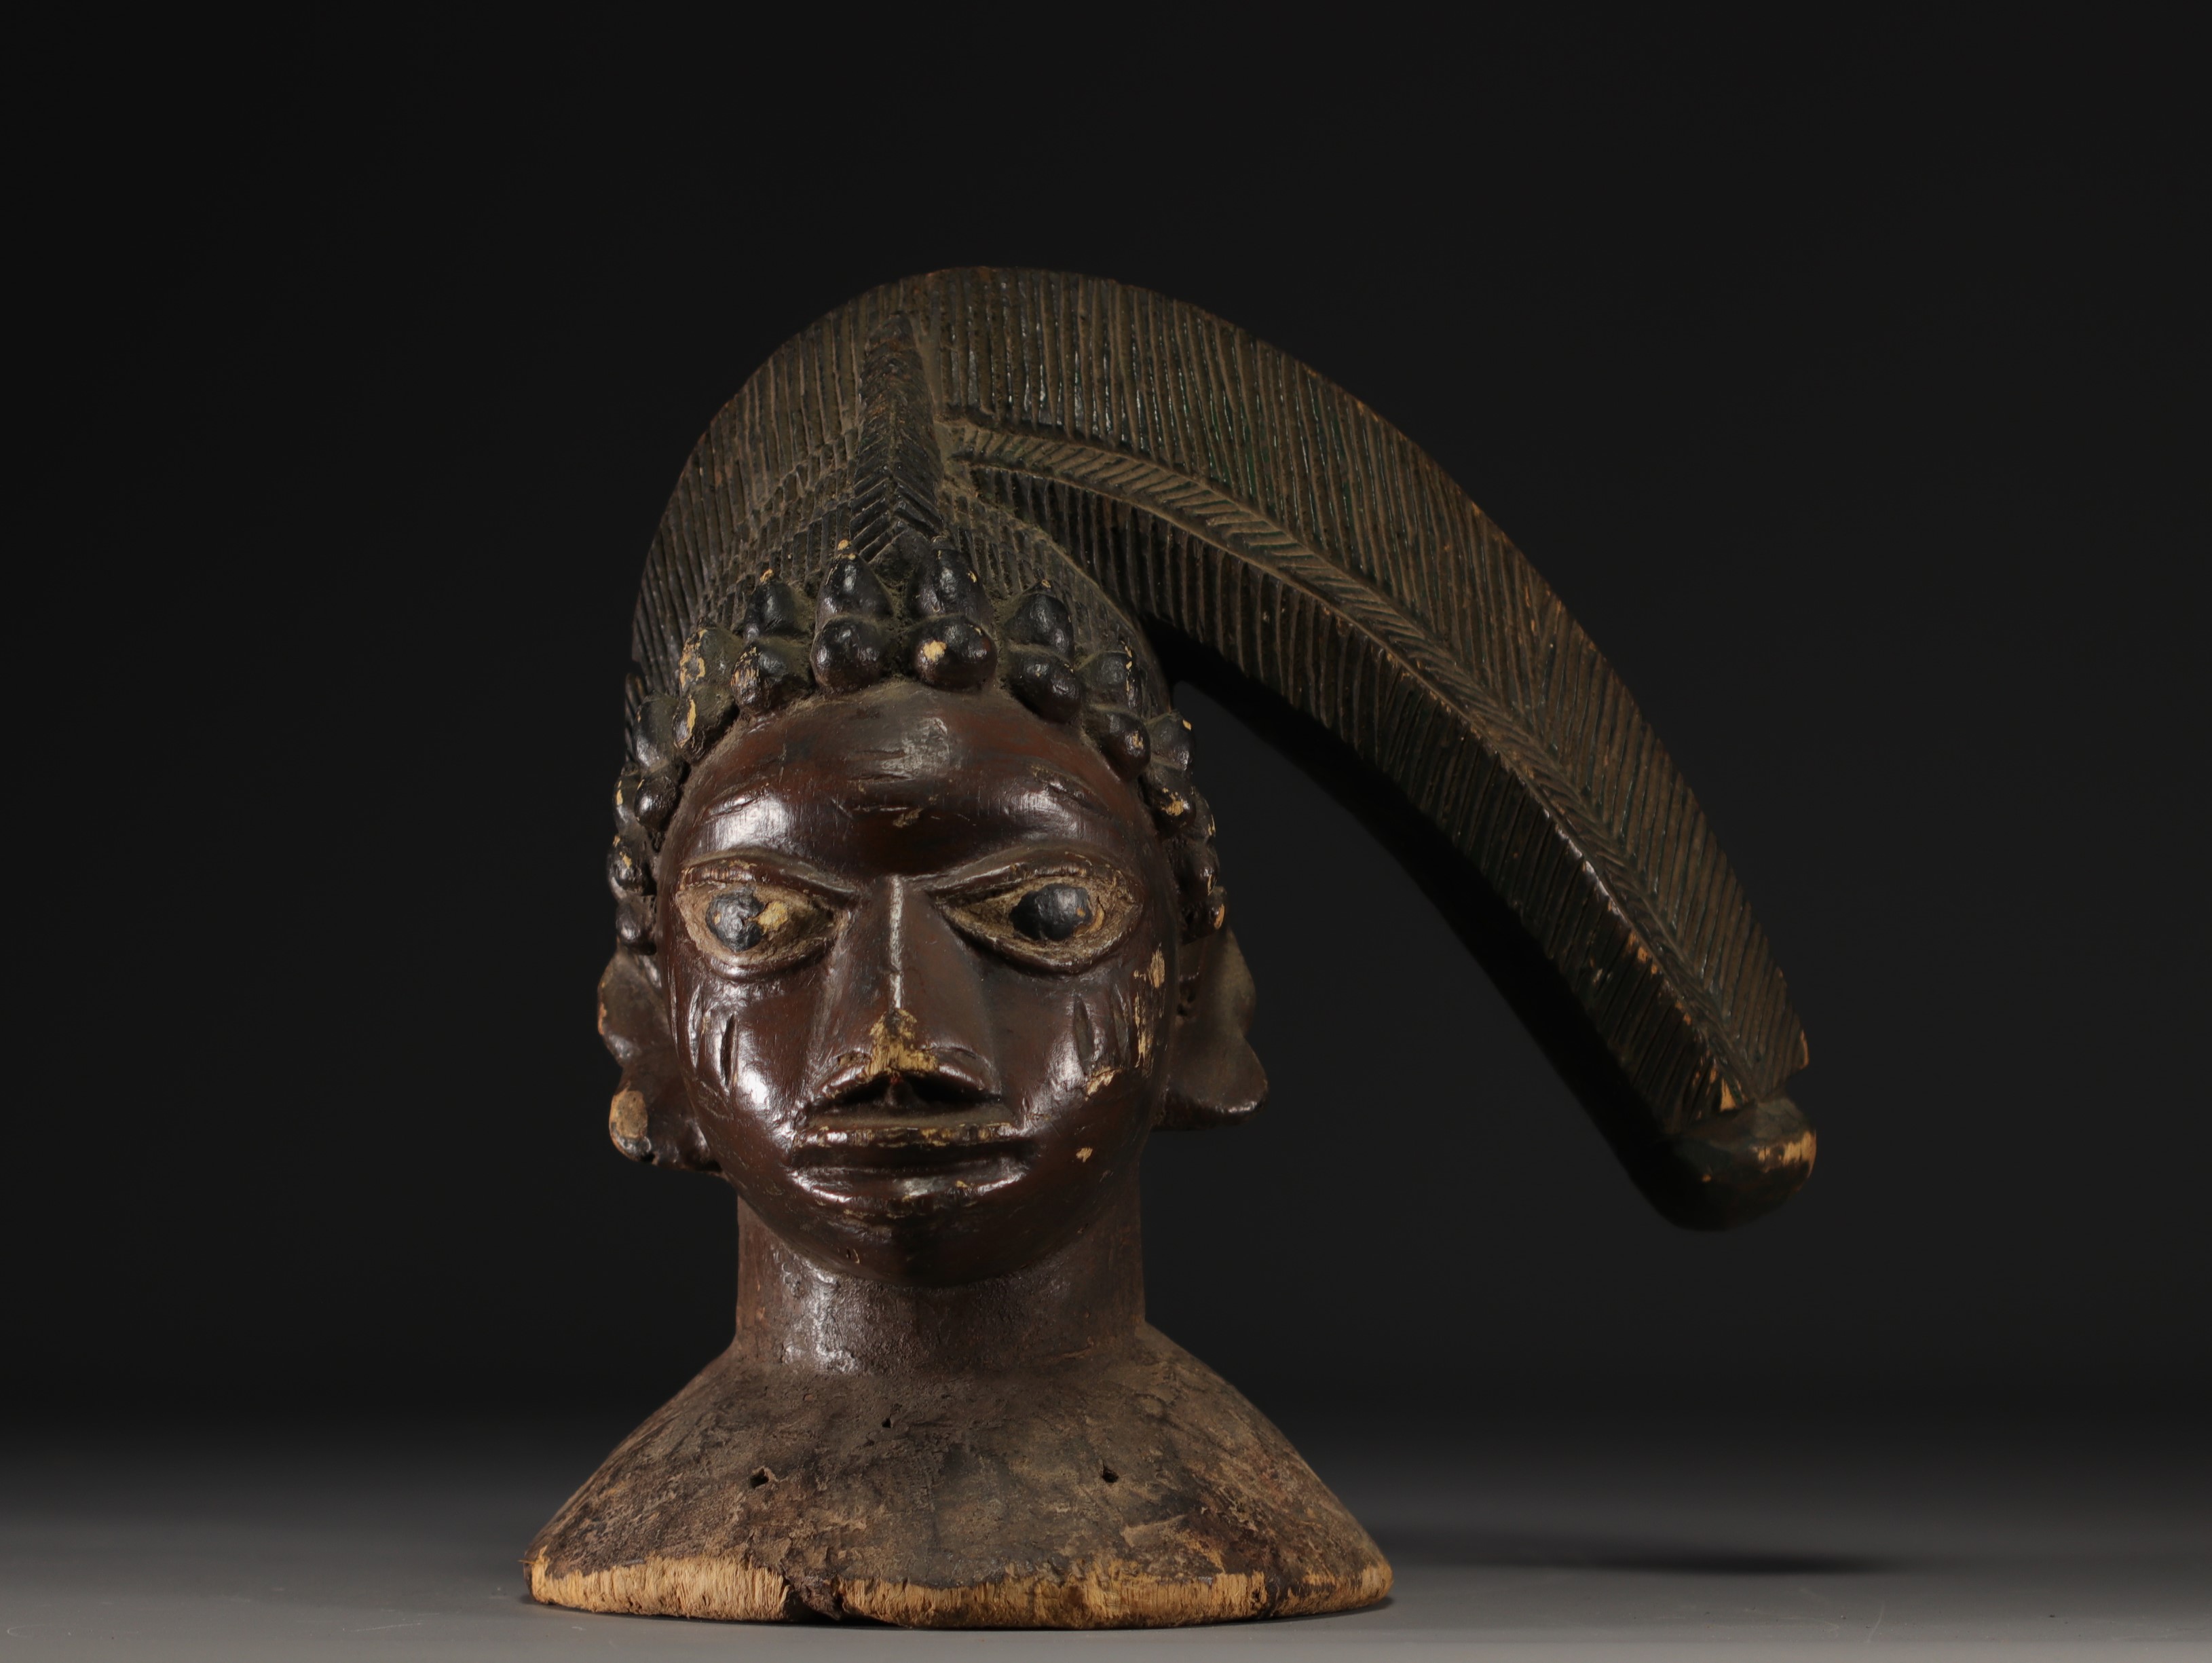 Crest mask - Yoruba - Nigeria